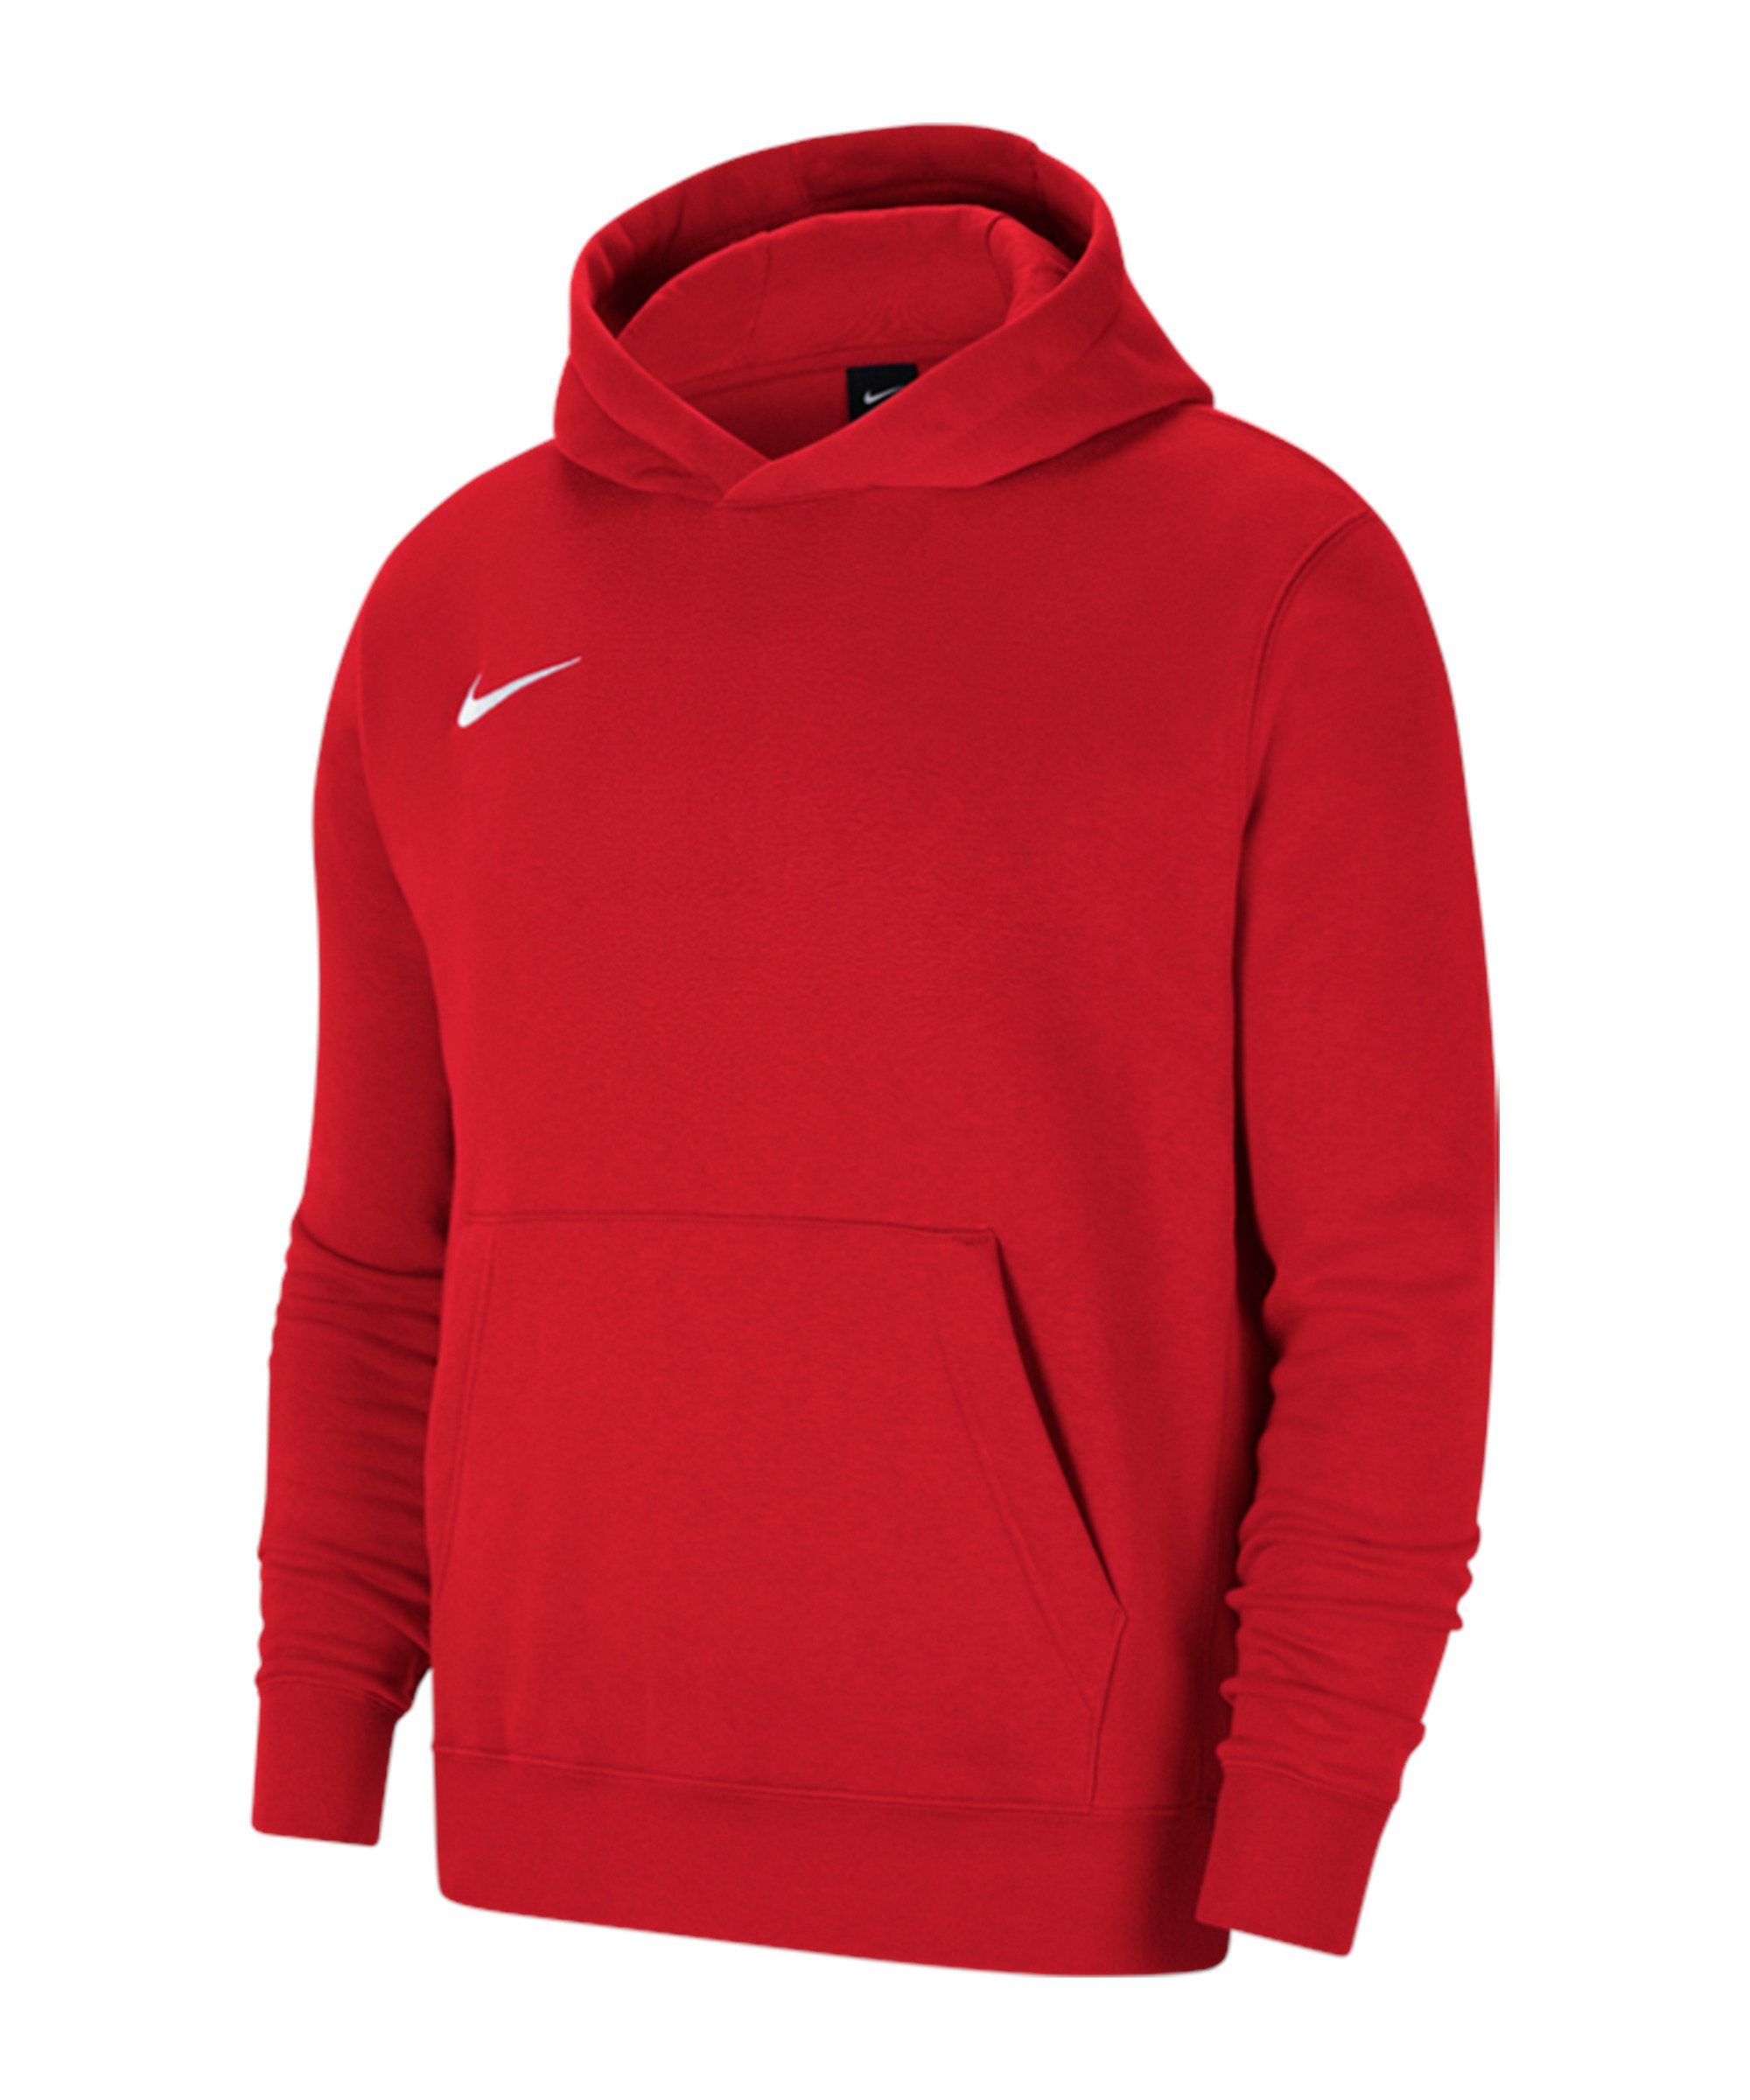 Kids Hoody Sweatshirt Fleece Nike Park rotweiss 20